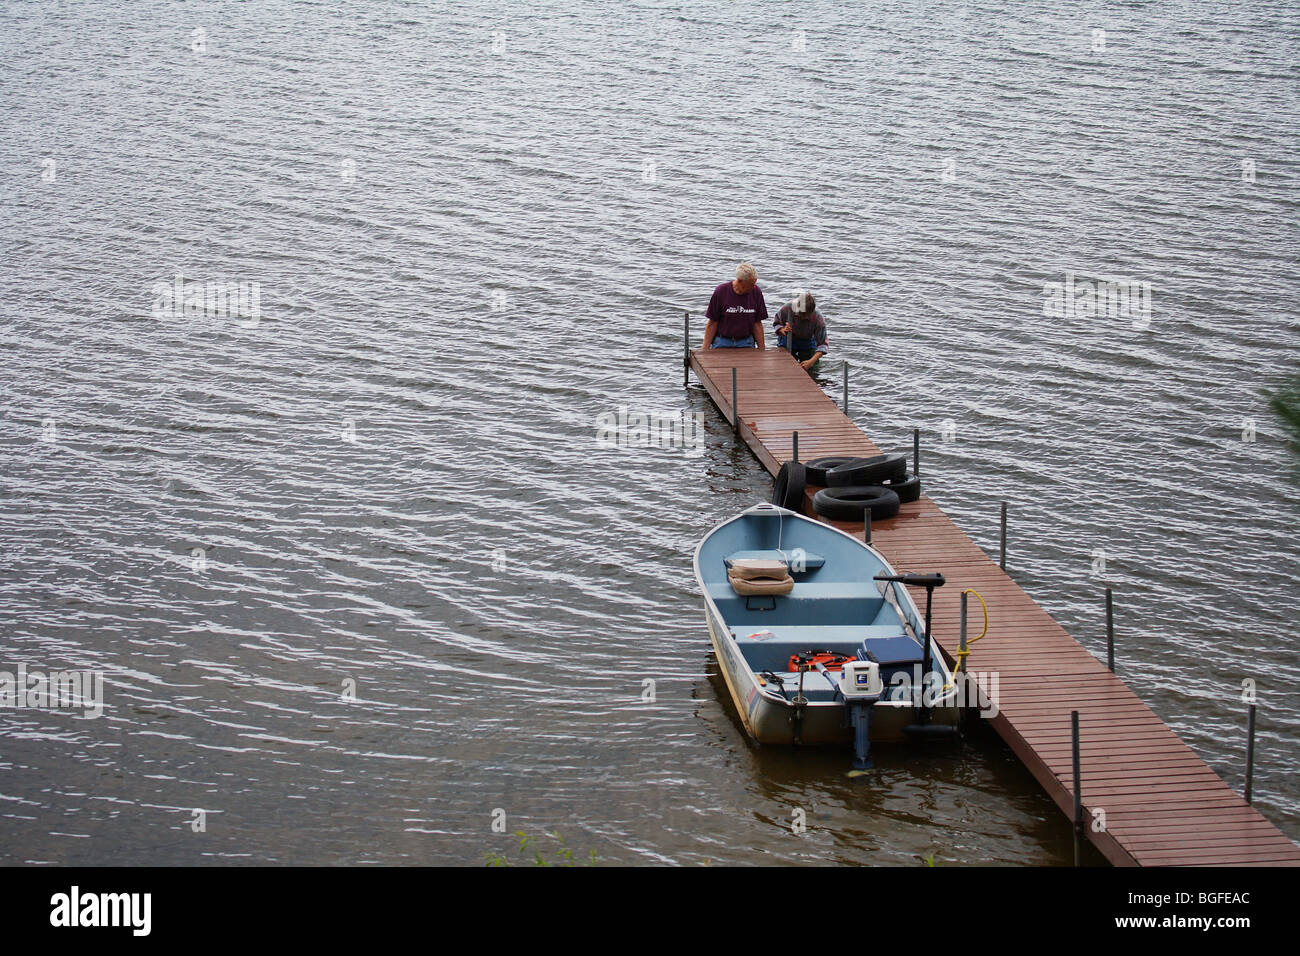 man and woman standing in lake raising boat dock alumnacraft fishing boat Stock Photo